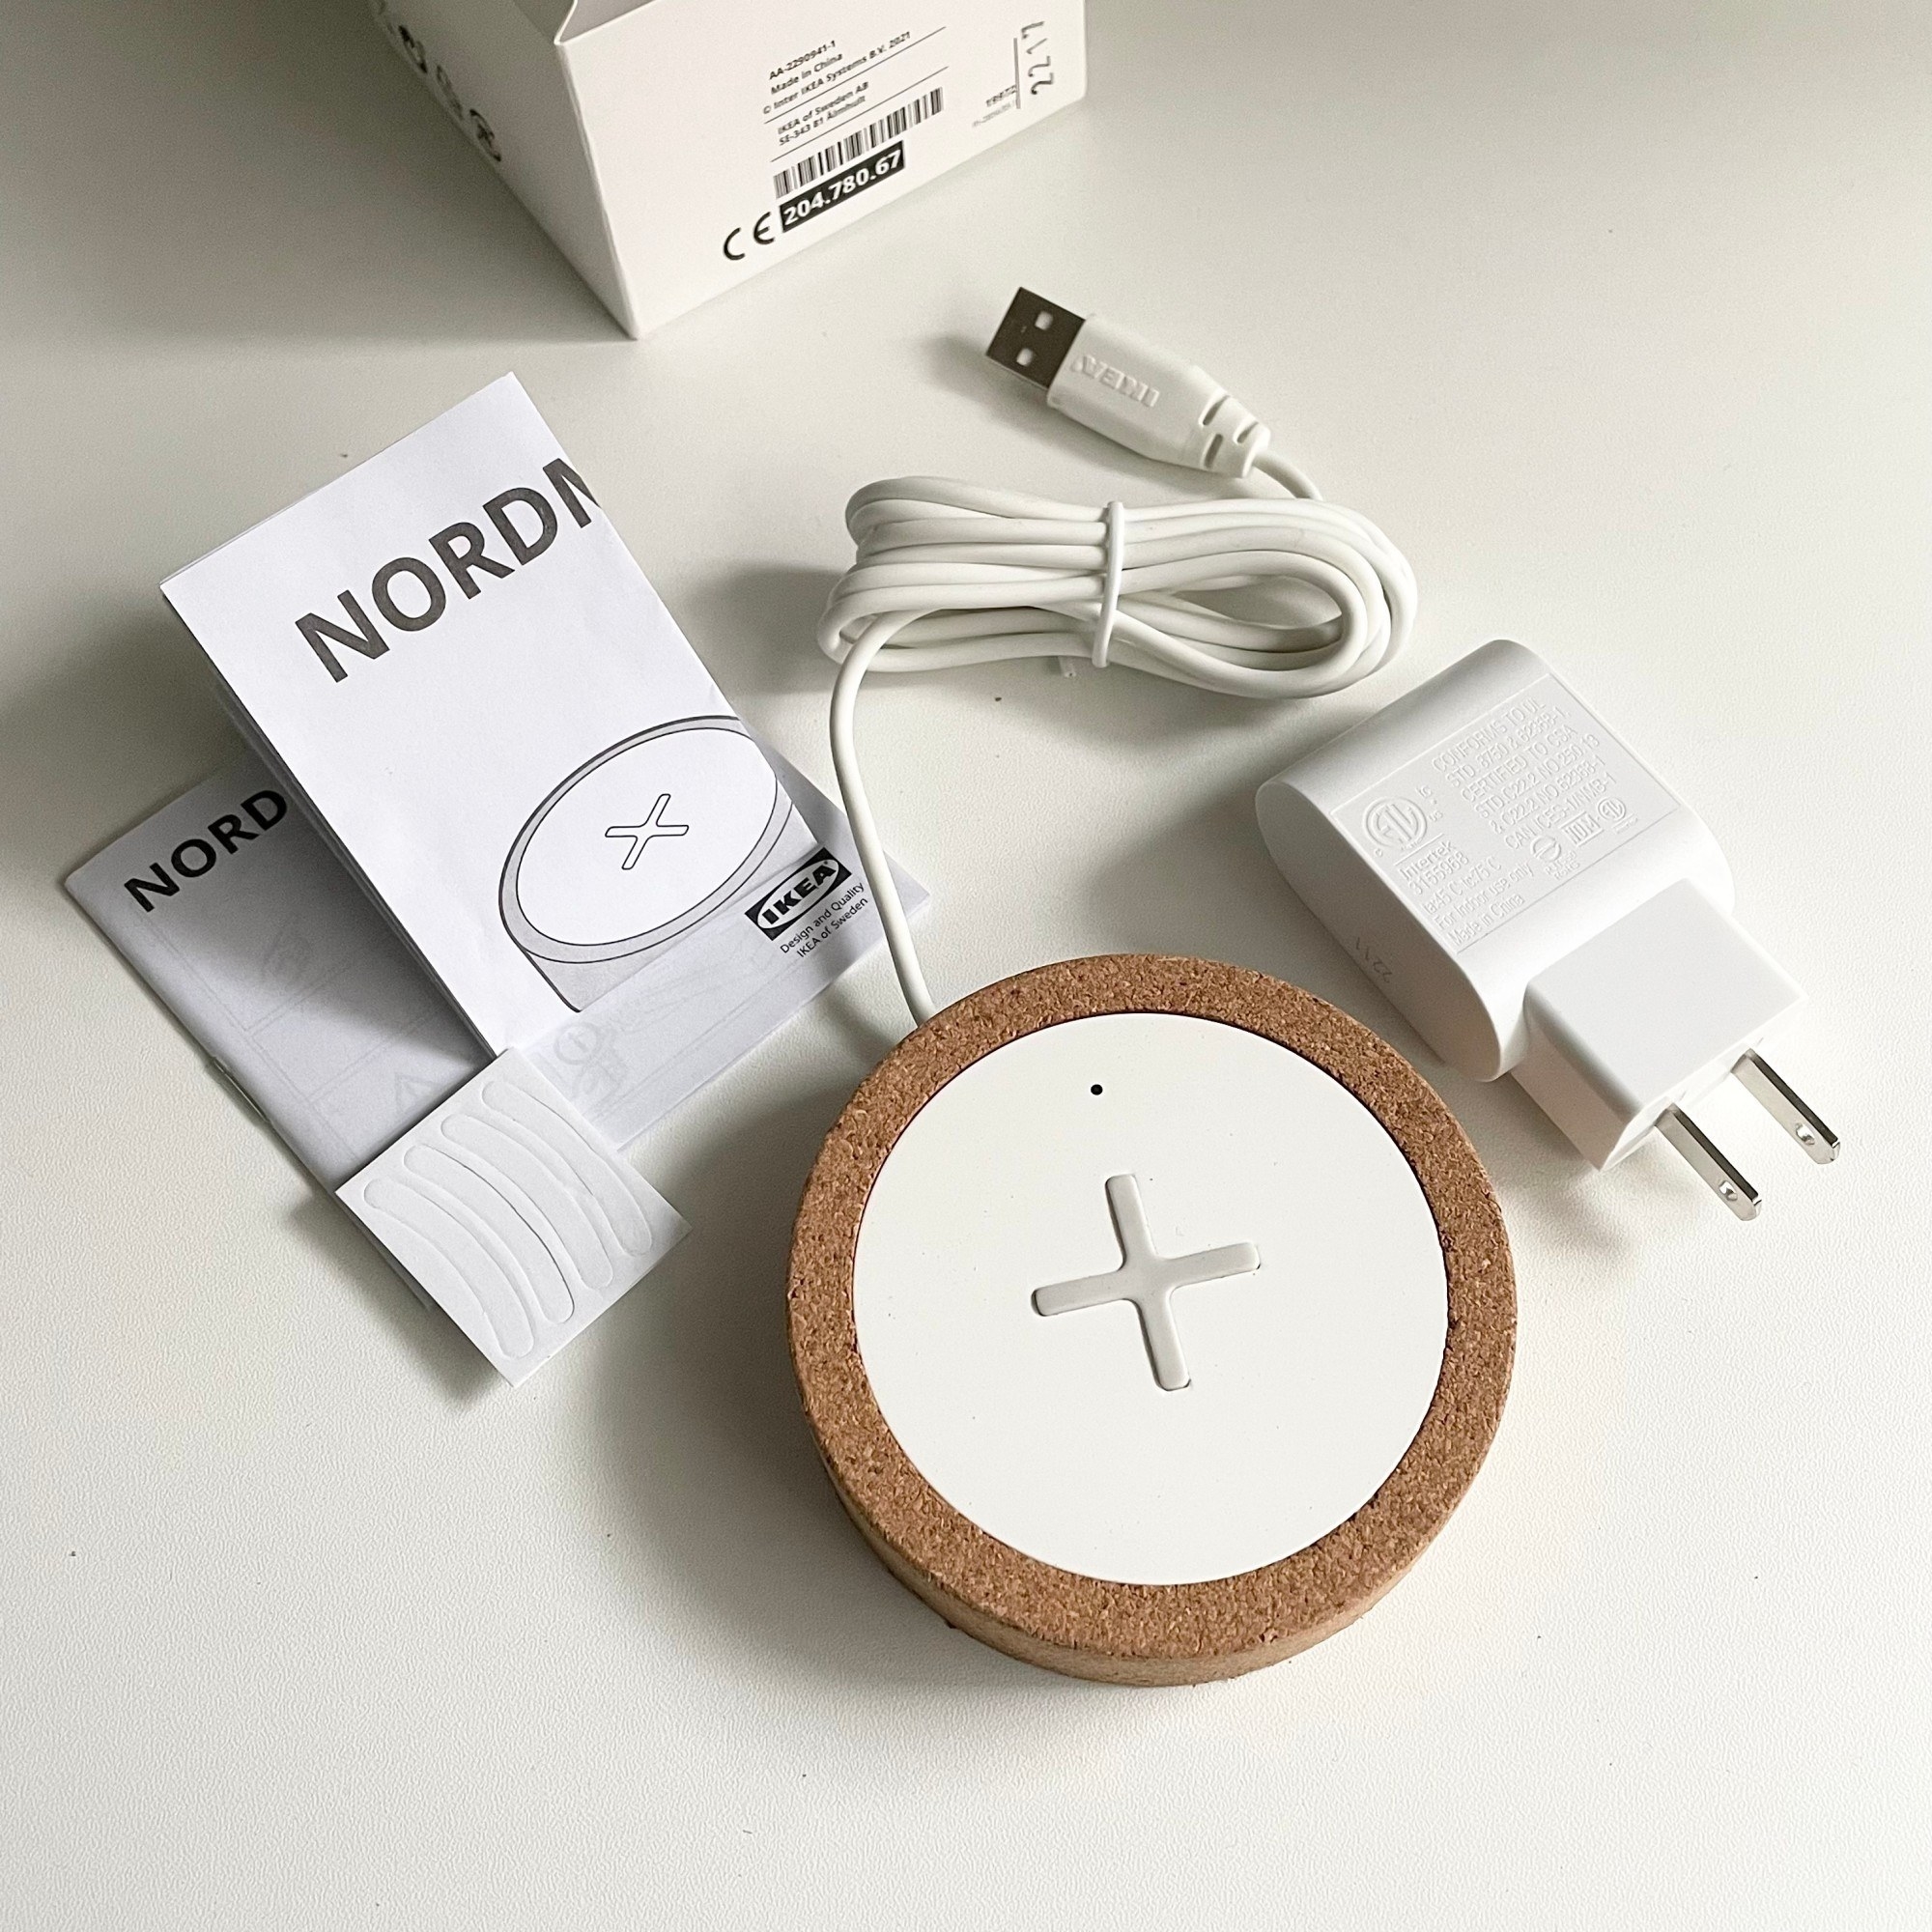 IKEA（イケア）の便利アイテム「NORDMÄRKE ノールドメルケ ワイヤレス充電器」